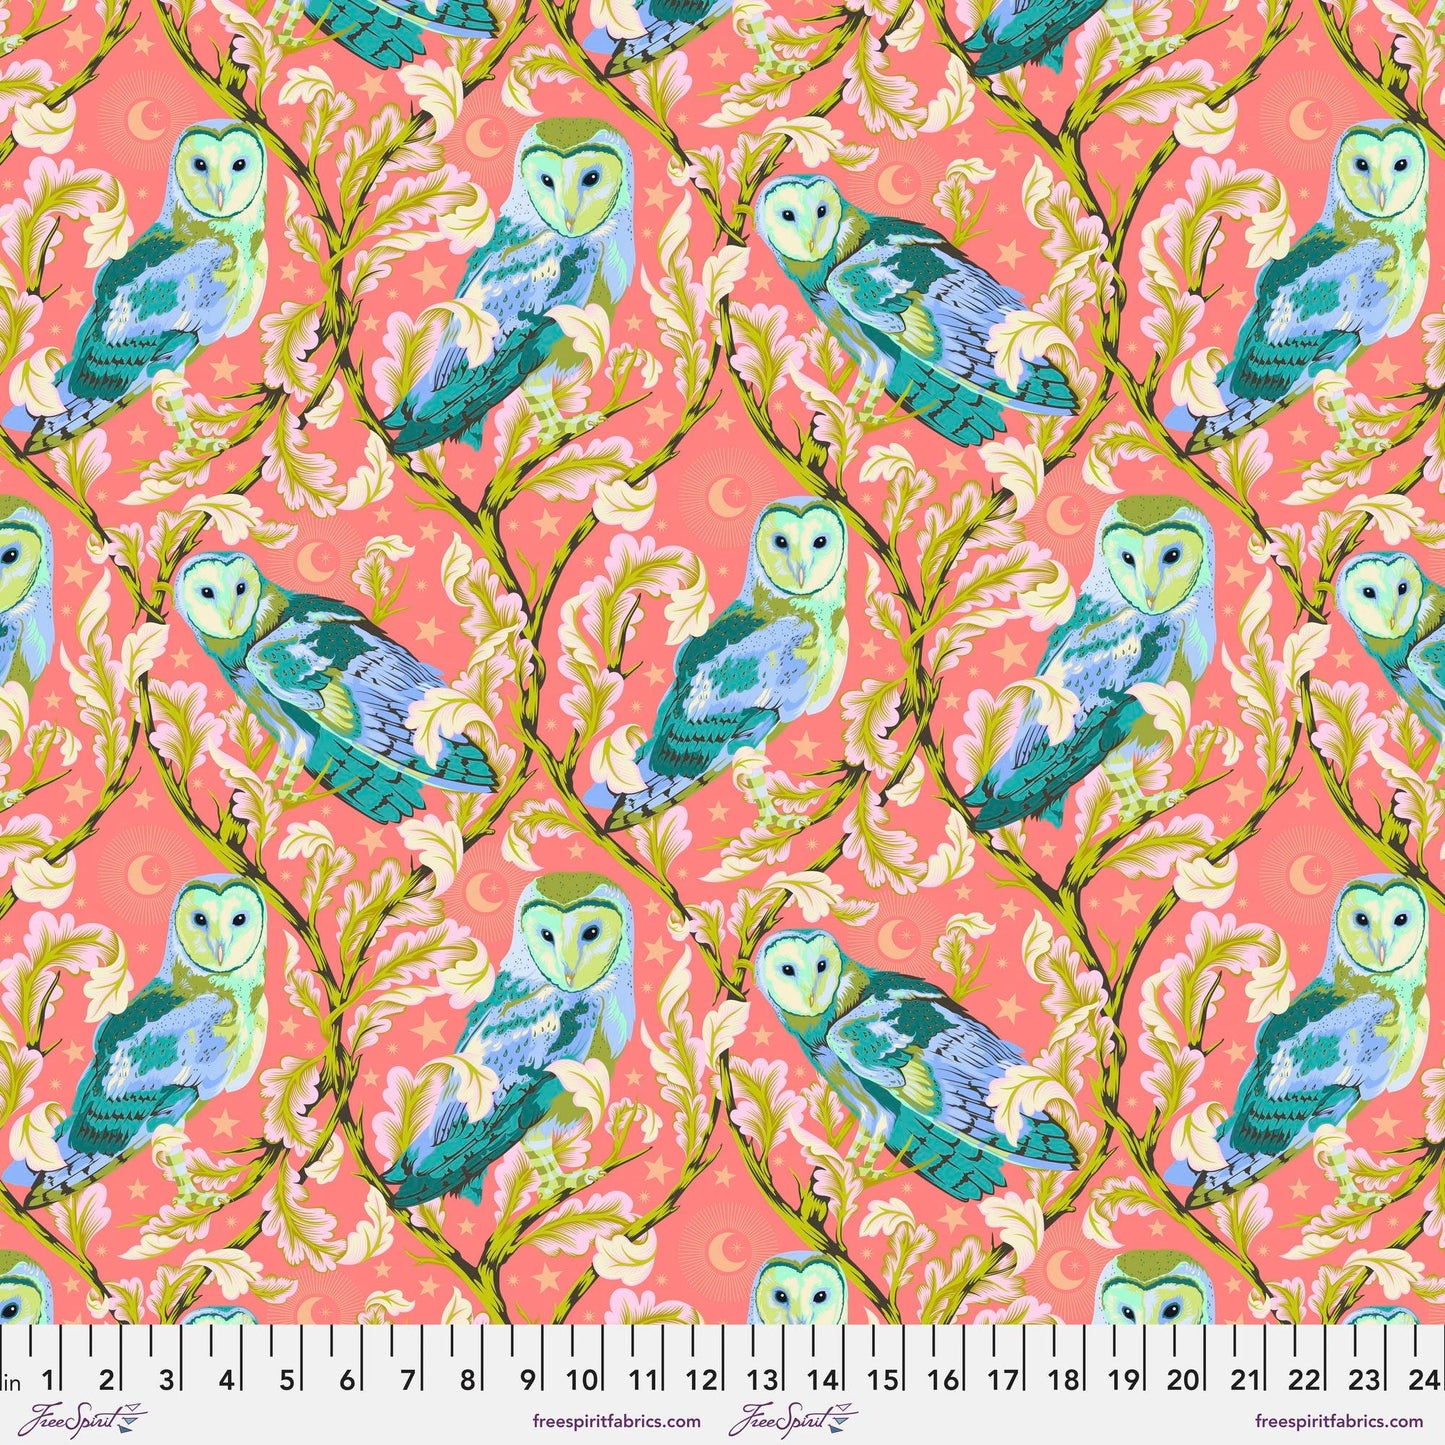 Night Owl Dawn Moon Garden Tula Pink Freespirit Fabrics 100% Quilters Cotton Fabric Fetish